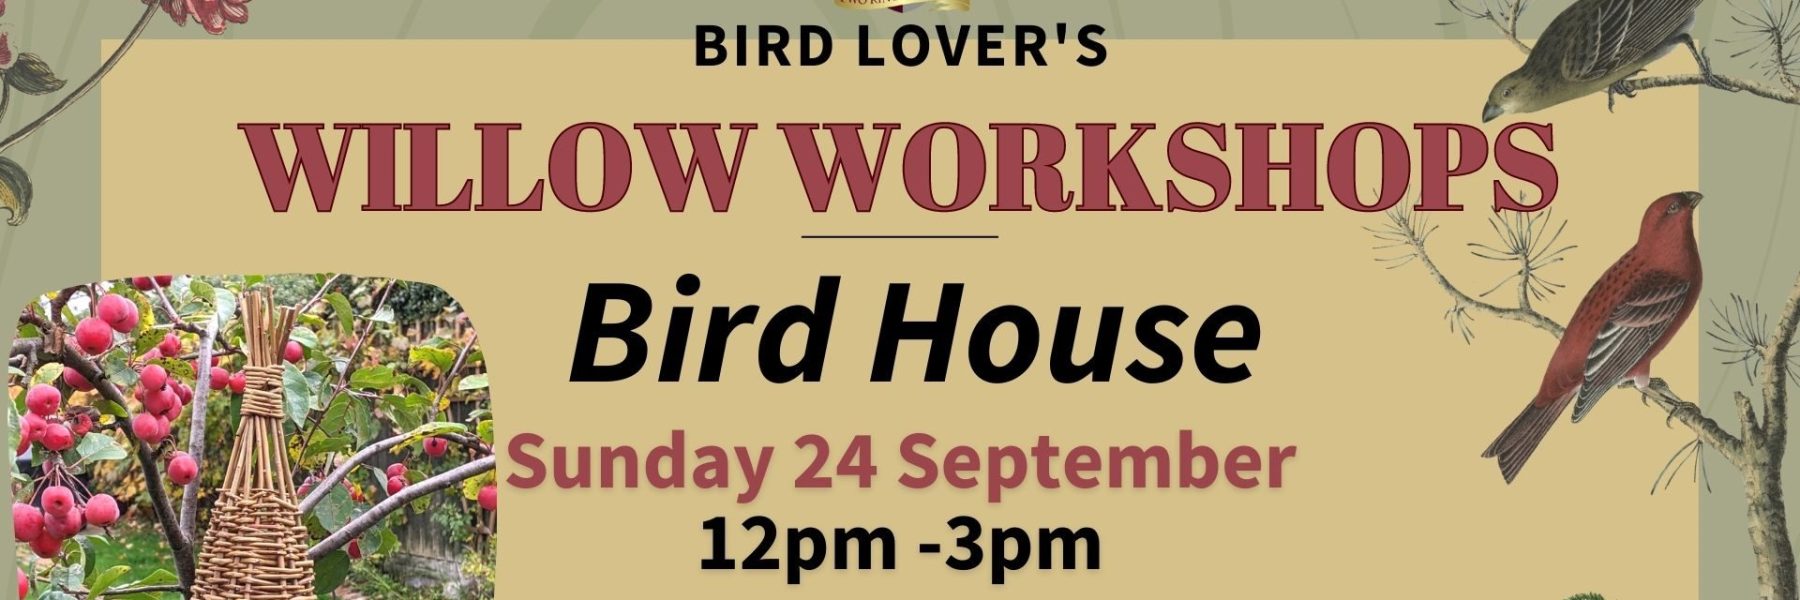 Bird Lovers Willow Workshop Bosworth Bird House Facebook Event Cover Aspect Ratio 640 340 Aspect Ratio 1800 600